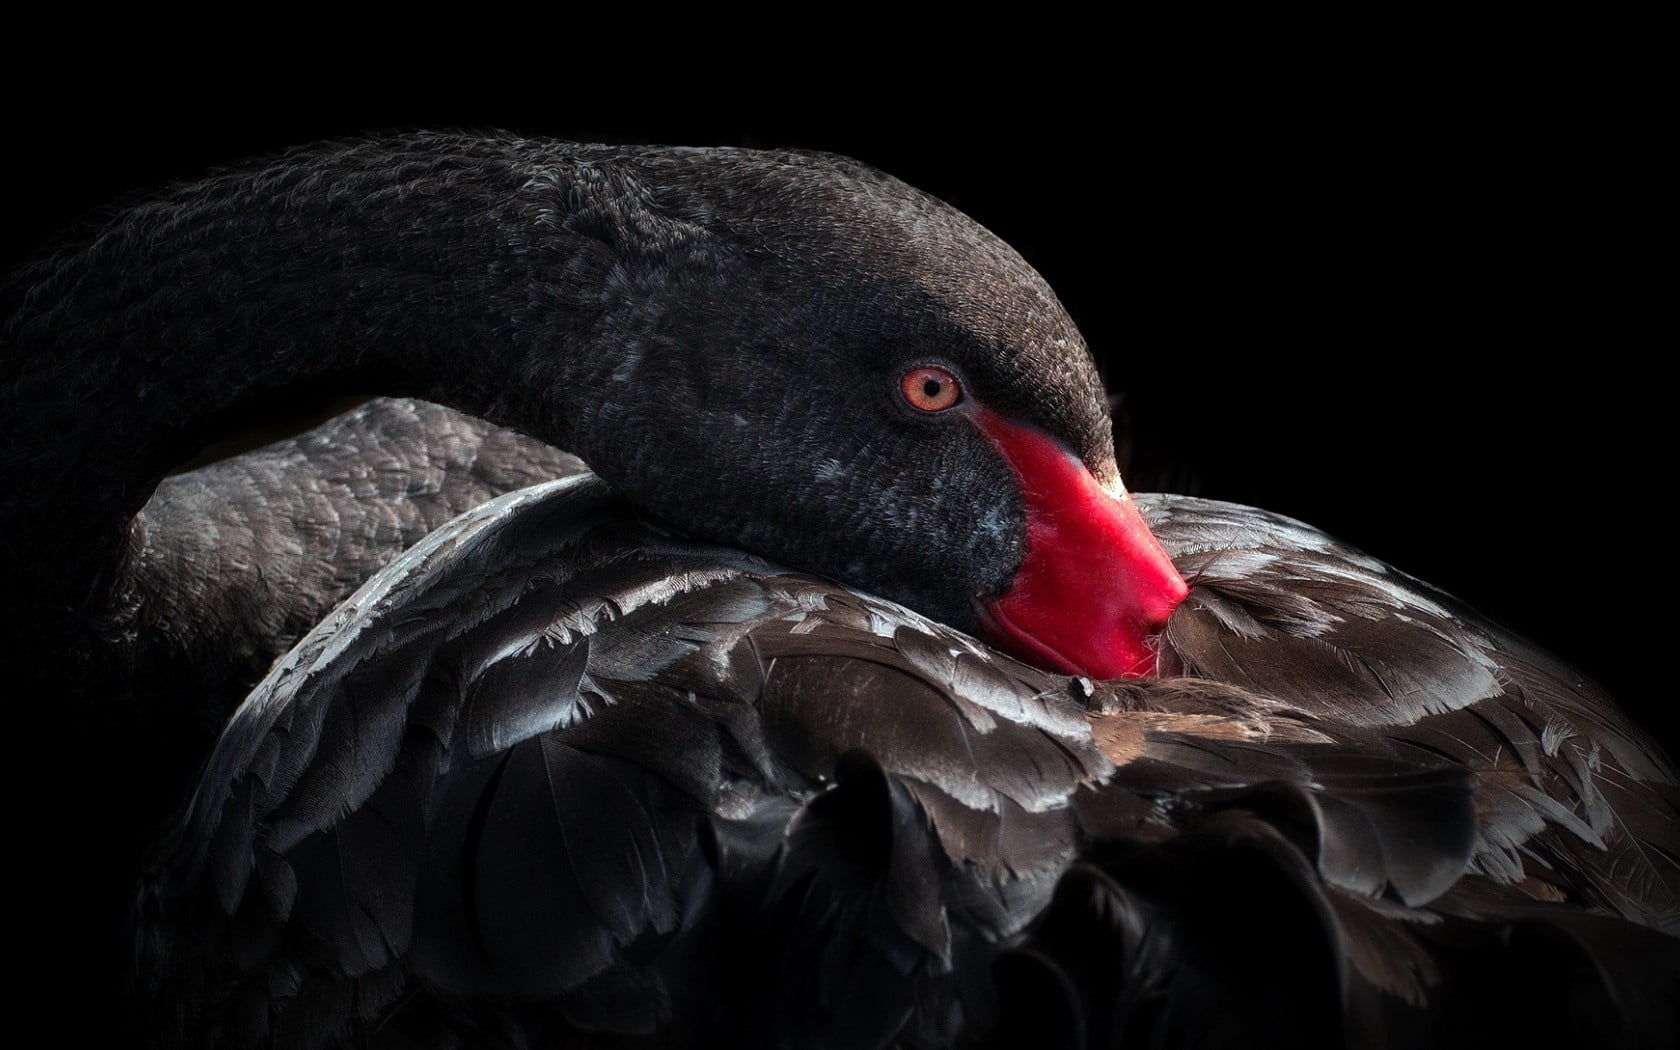 black swan, bird, beak, feathers, animal themes, animal wildlife